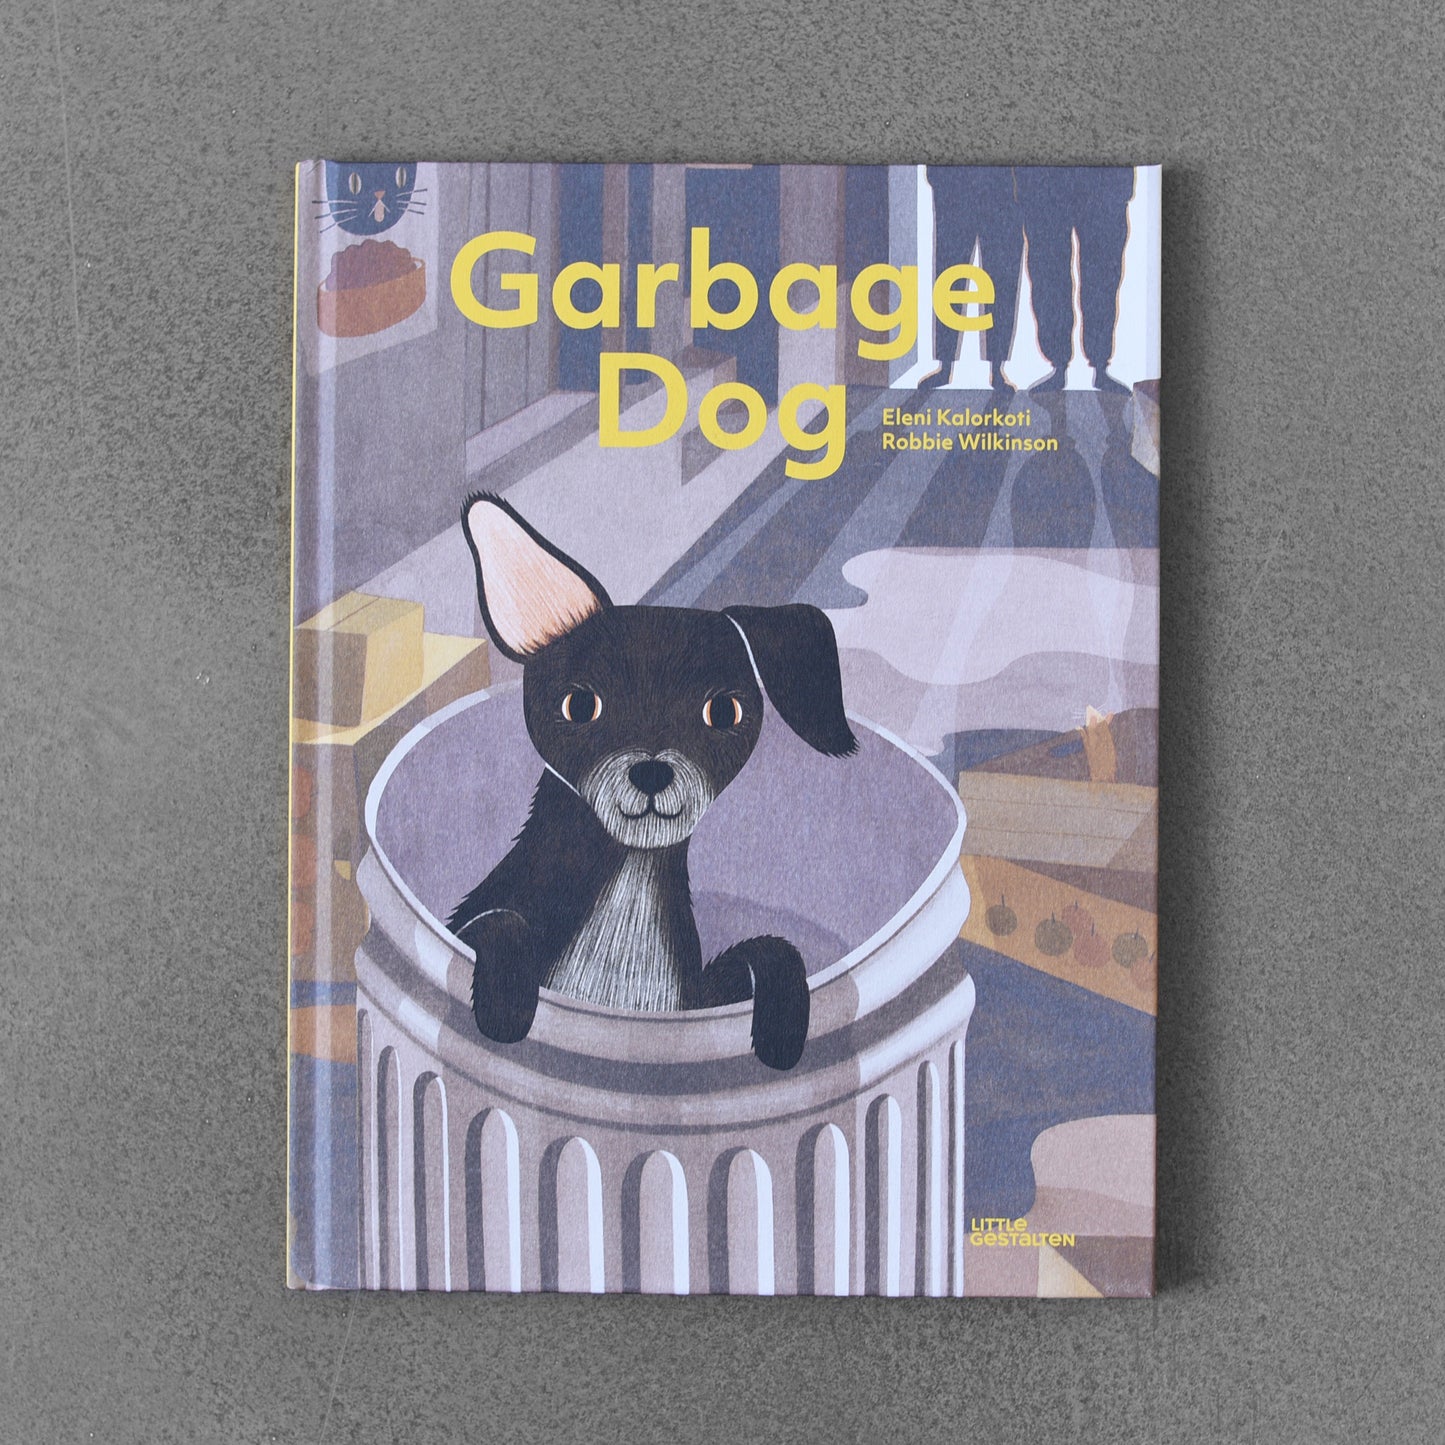 Garbage Dog - Robbie Wilkinson